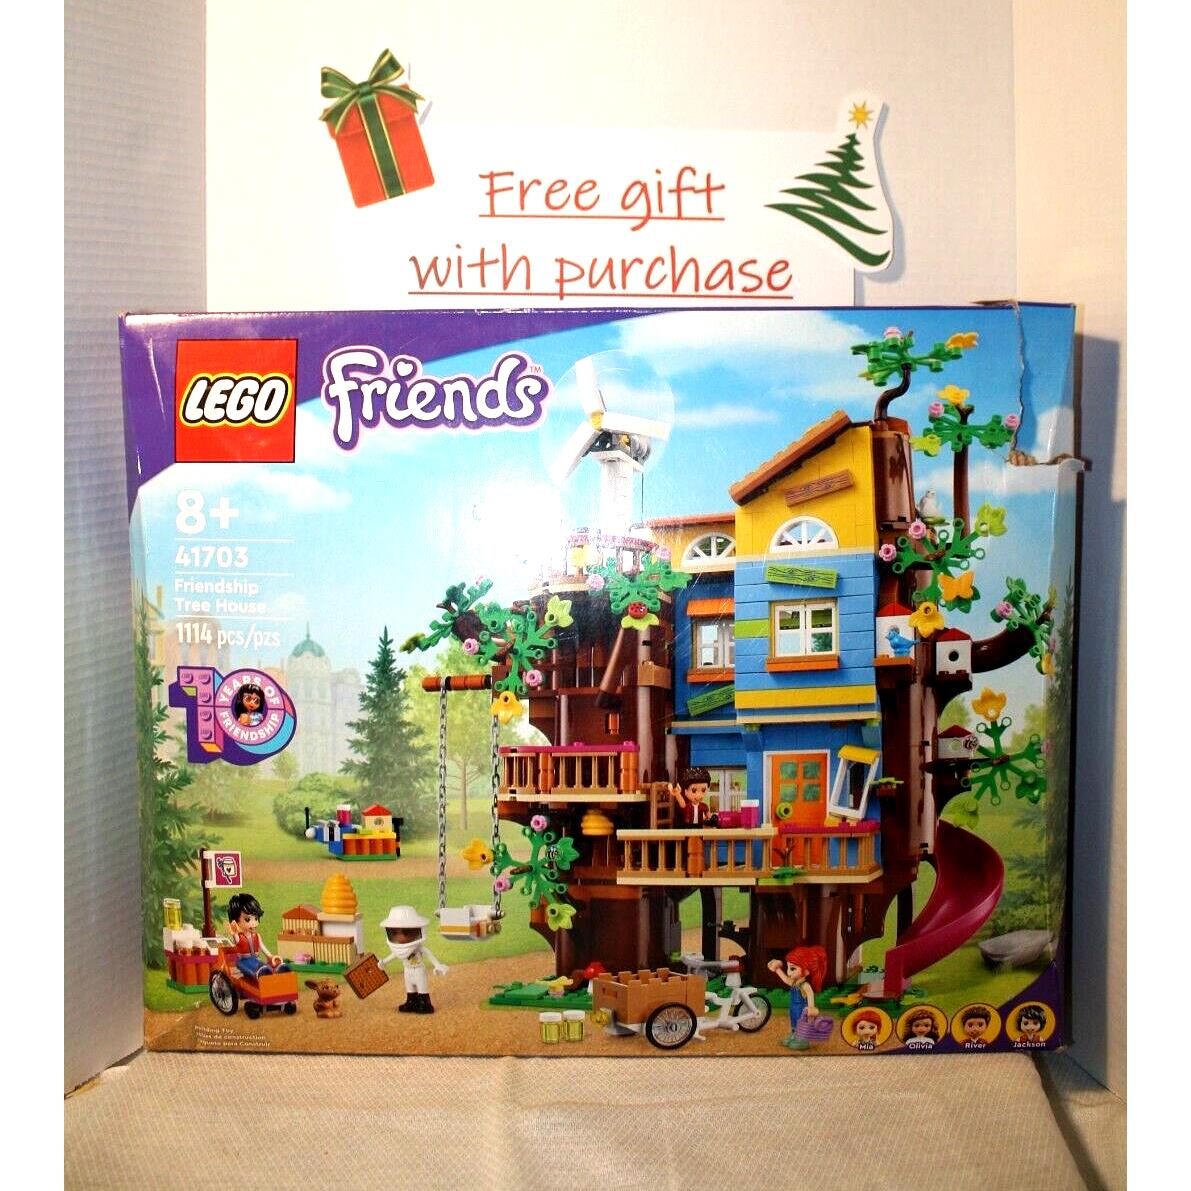 Lego Friends 41703 Friendship Tree House 1114 Pieces w/ Free Gift